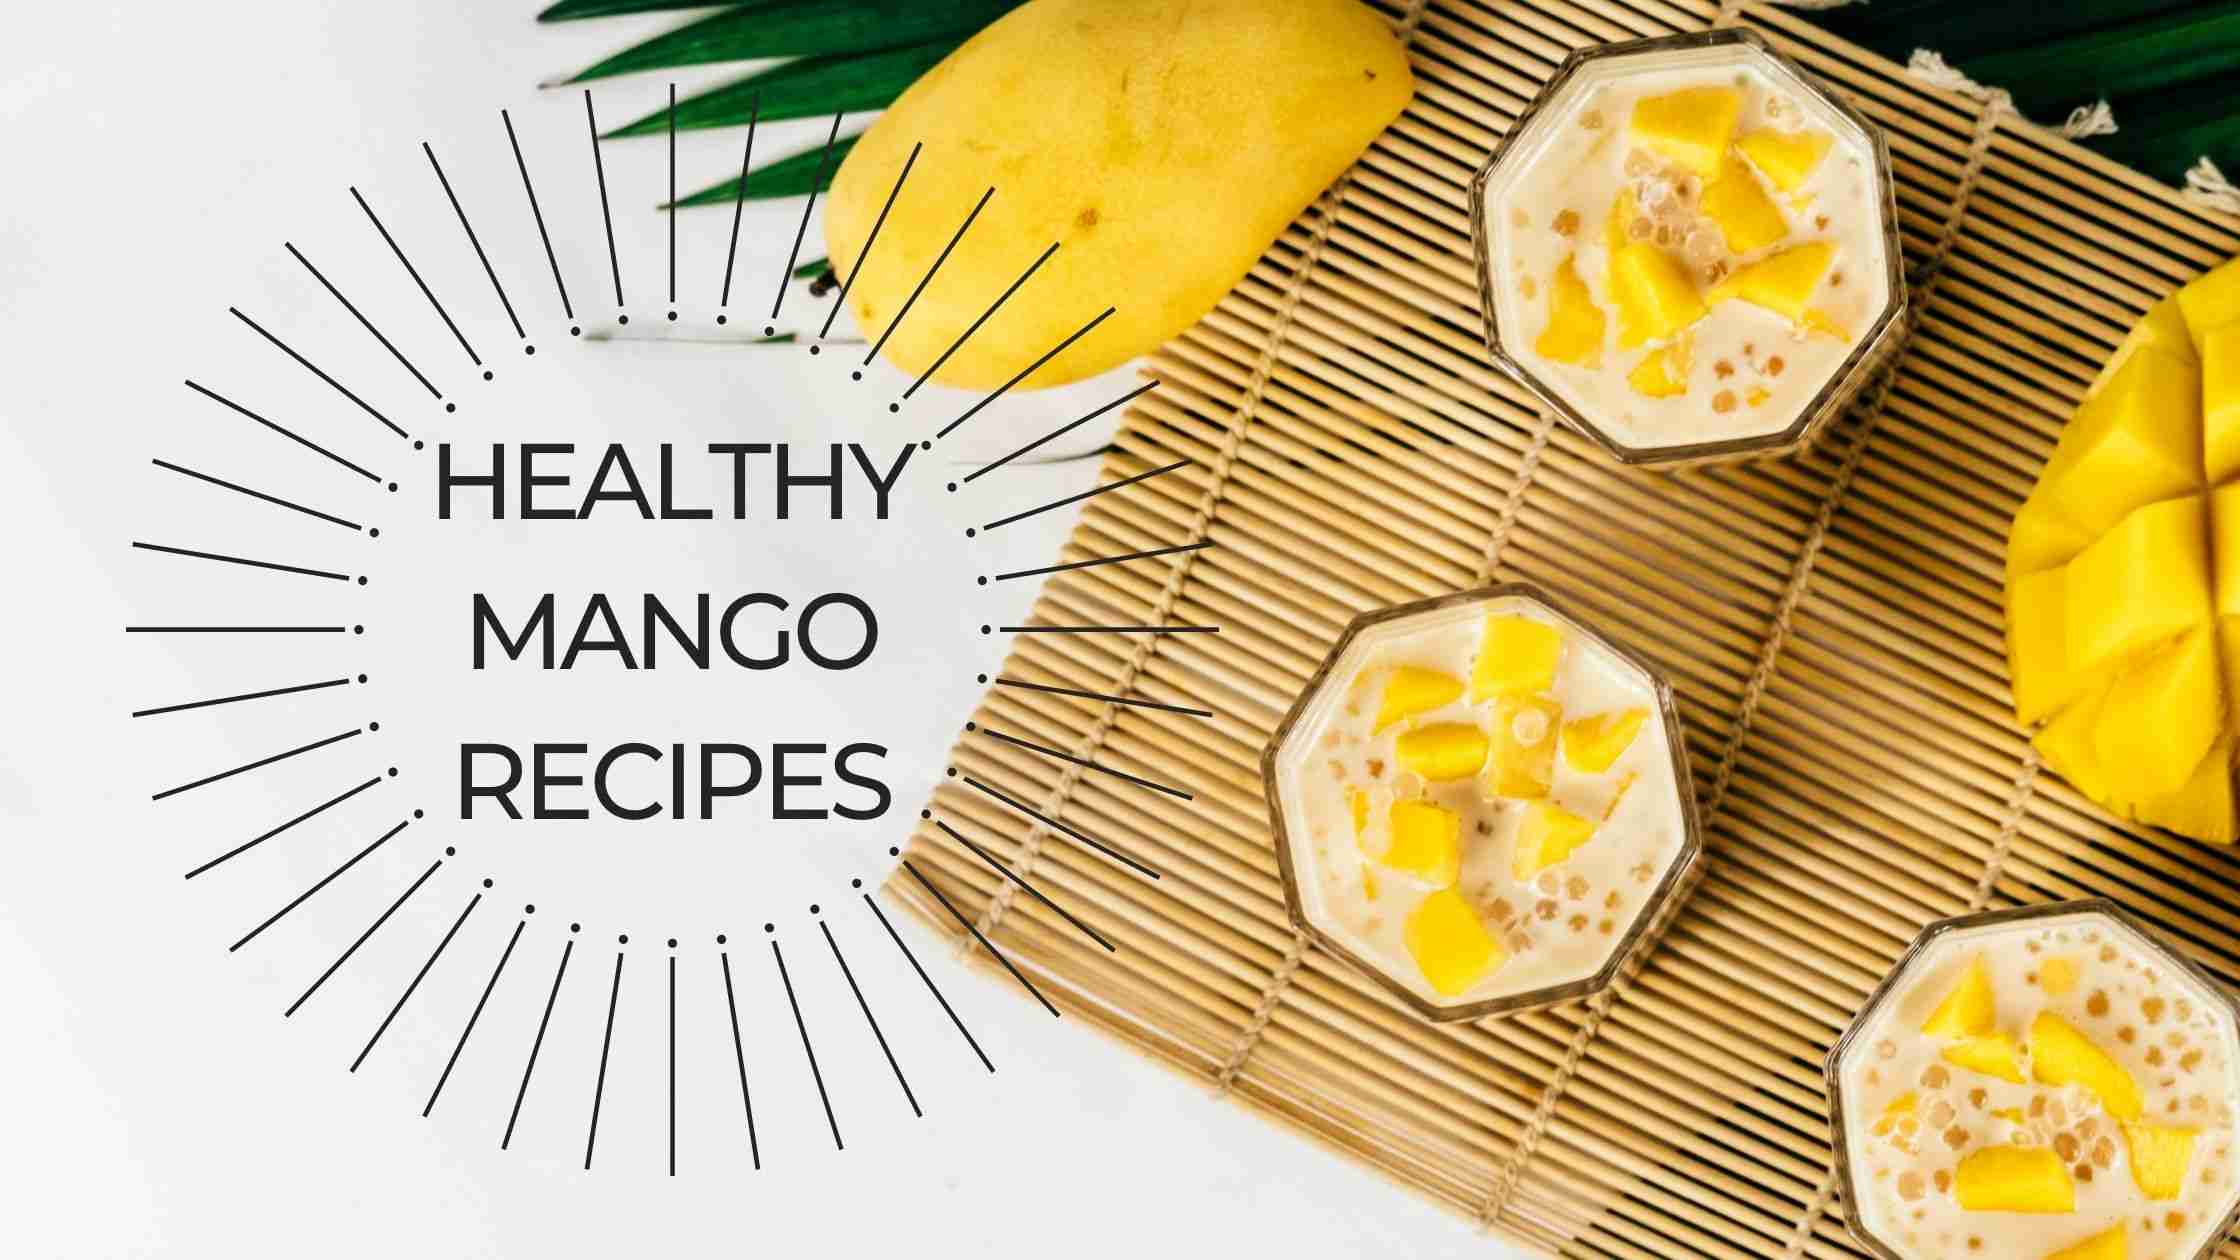 mango recipes, healthy mango recipes